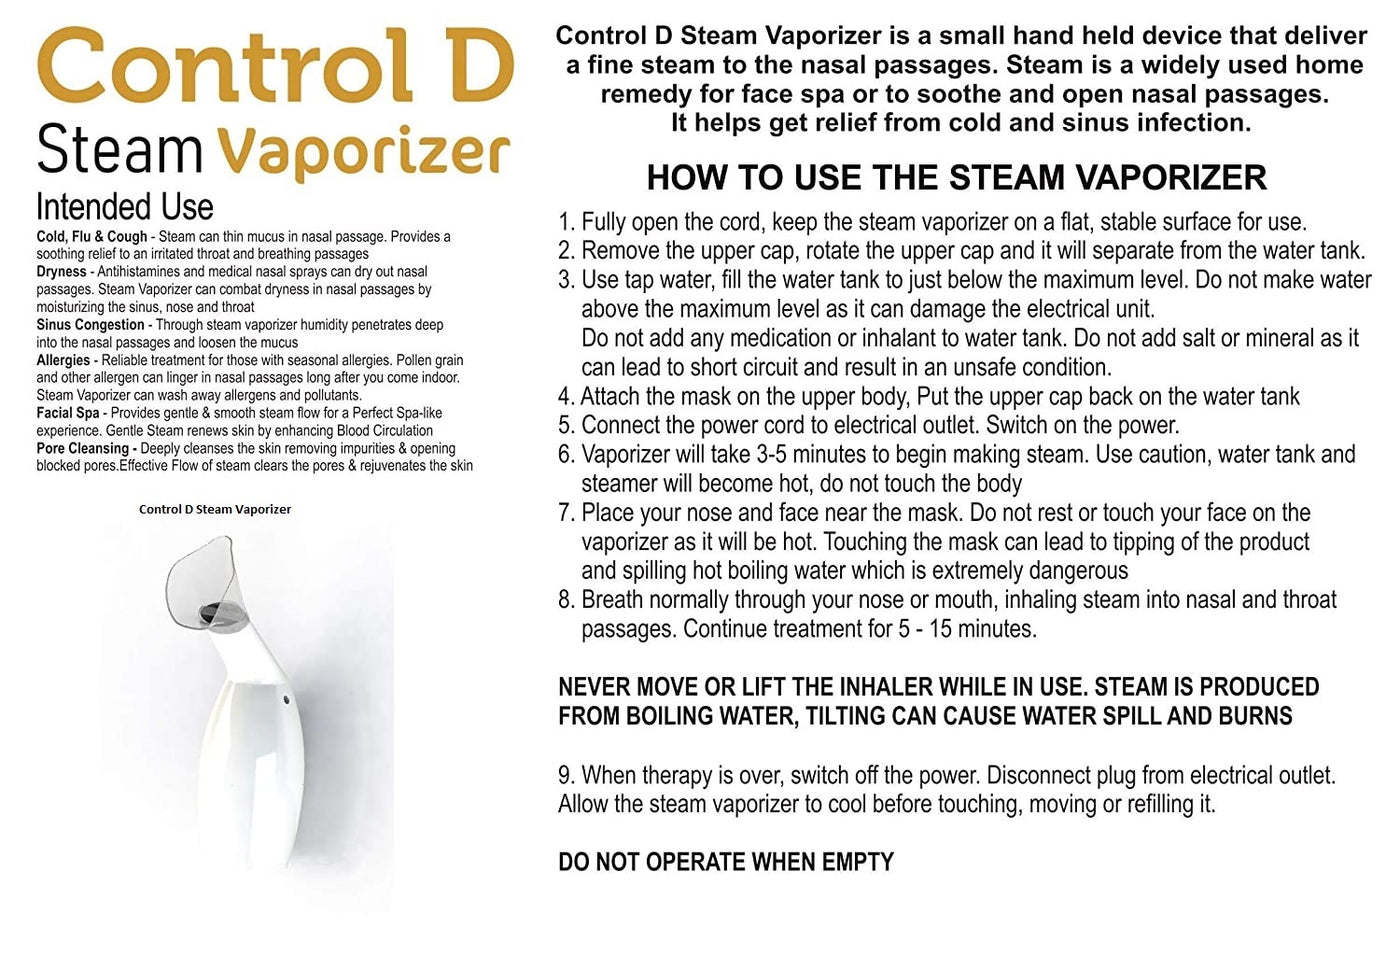 Steam Vaporizer (Home SPA Face Vaporizer) Control D